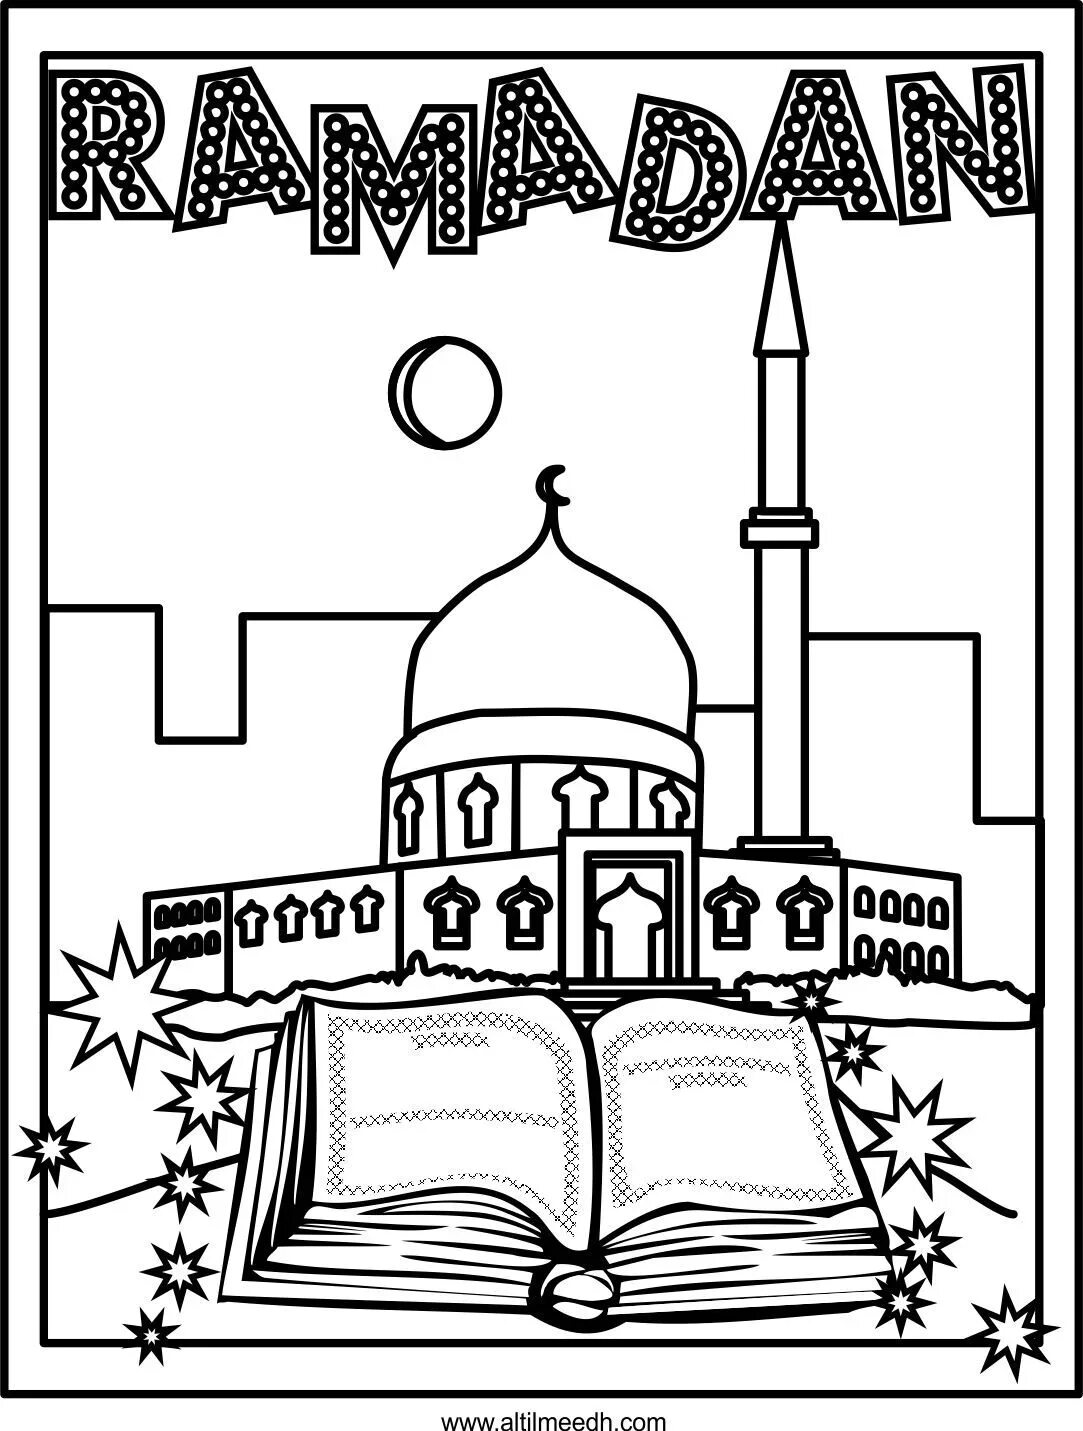 Раскраска рамадан для детей. Мусульманские раскраски. Рисунок на тему Рамазан.